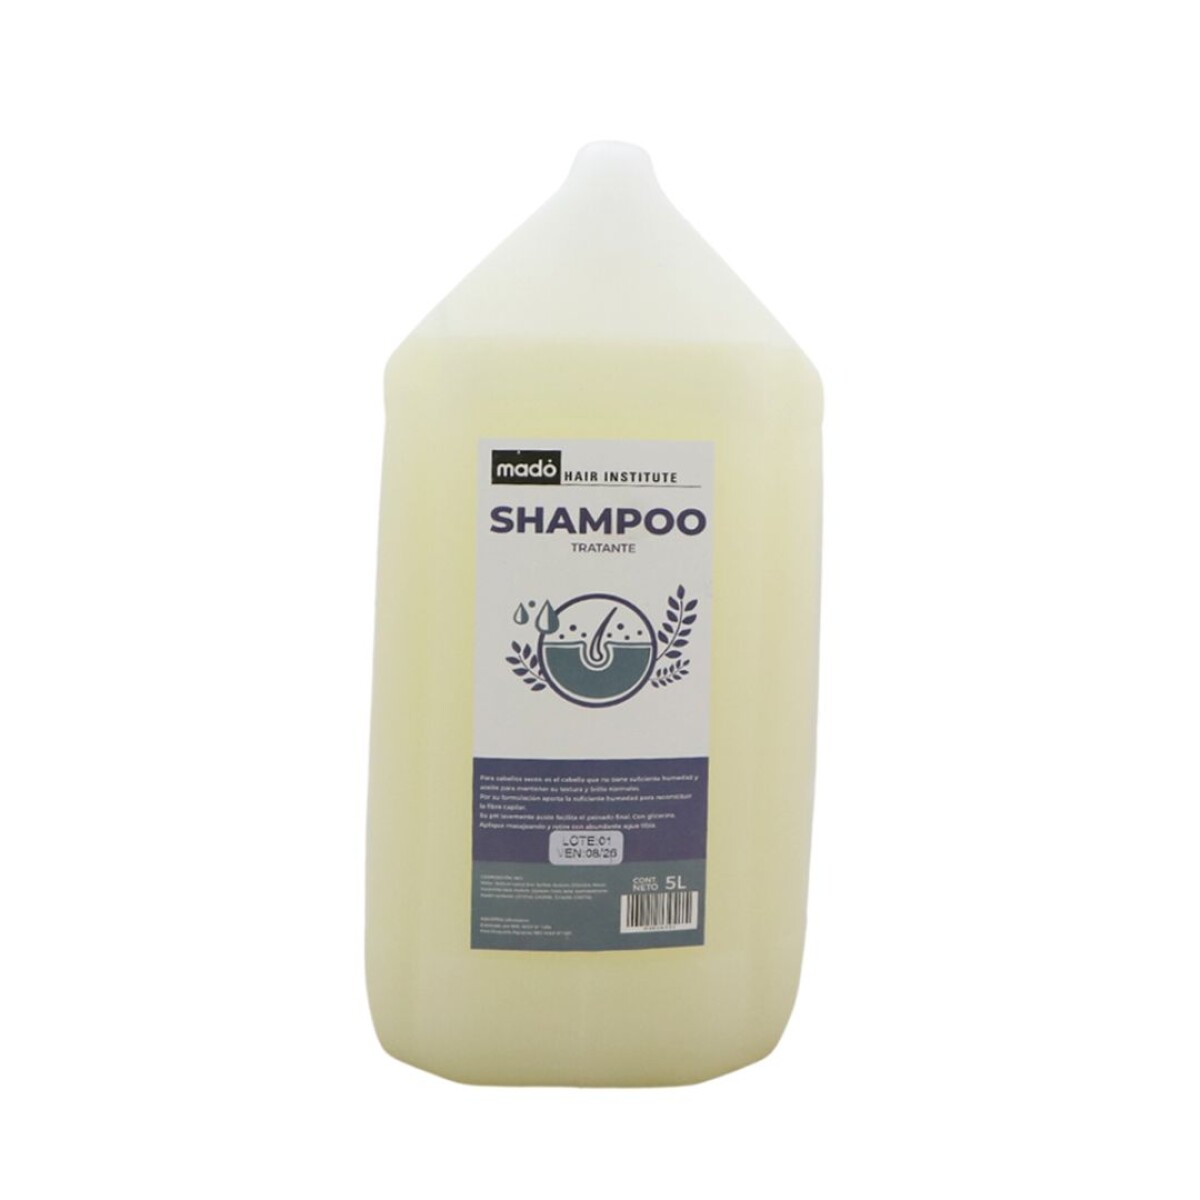 Shampoo MADO - Tratante (SIN SAL) - 5 L 